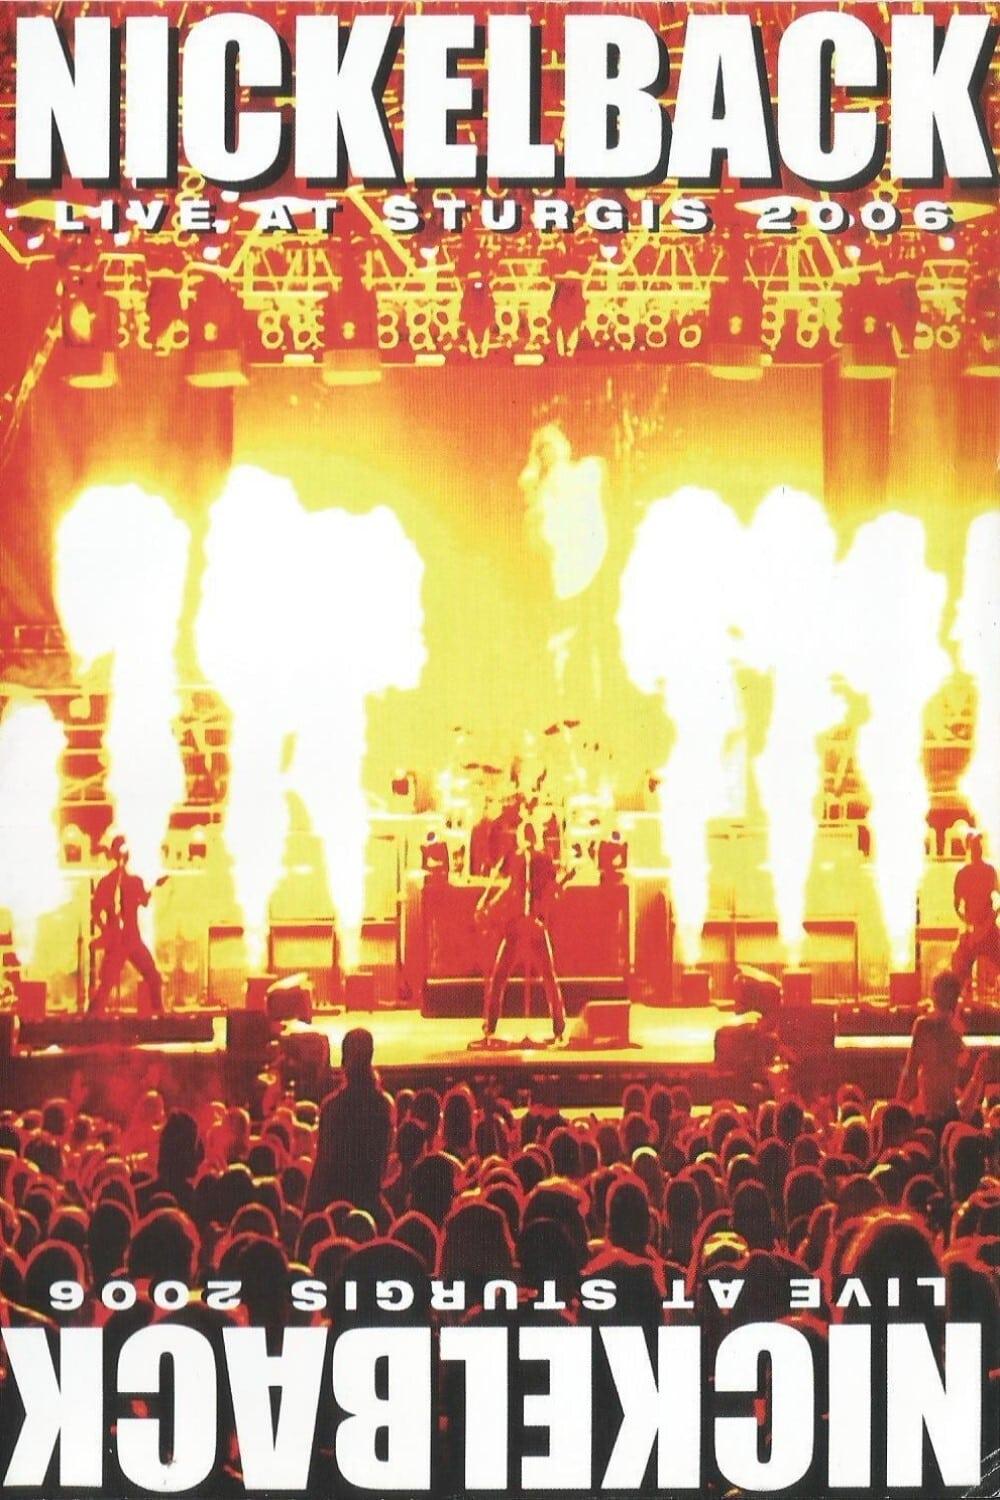 Nickelback - Live at Sturgis 2006 poster